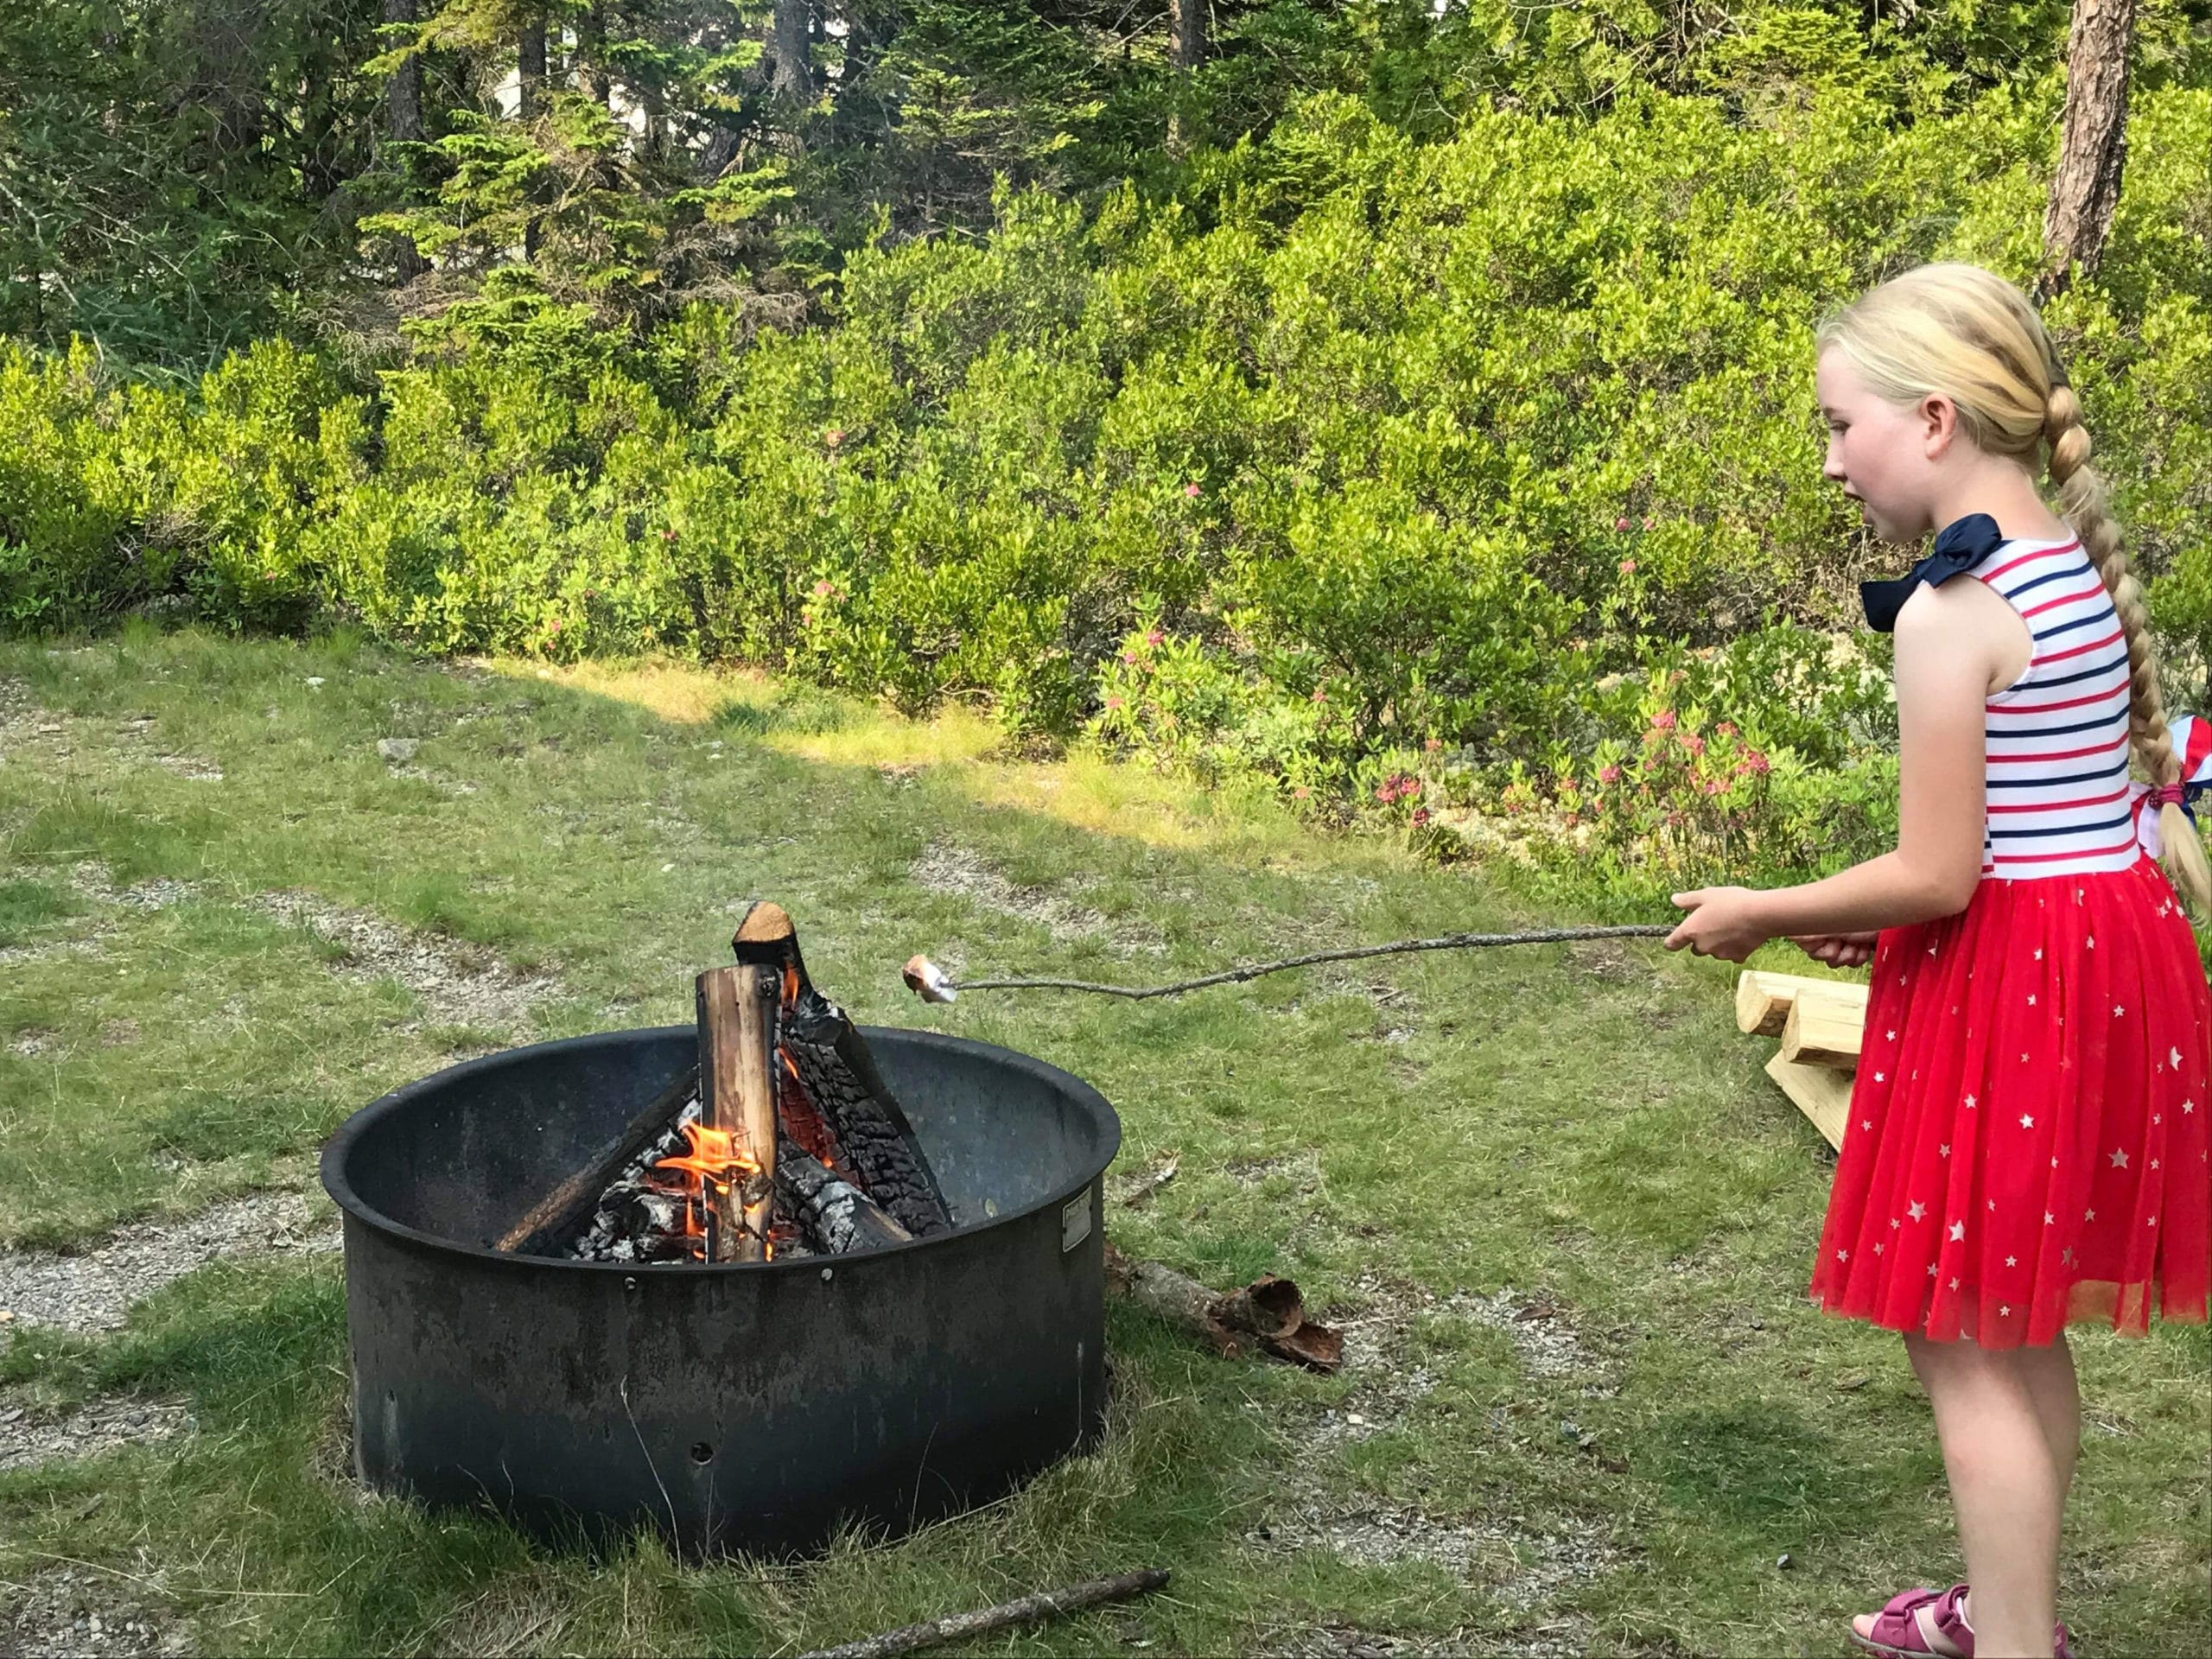 Girl Roasting Marshmallows Over A Campfire